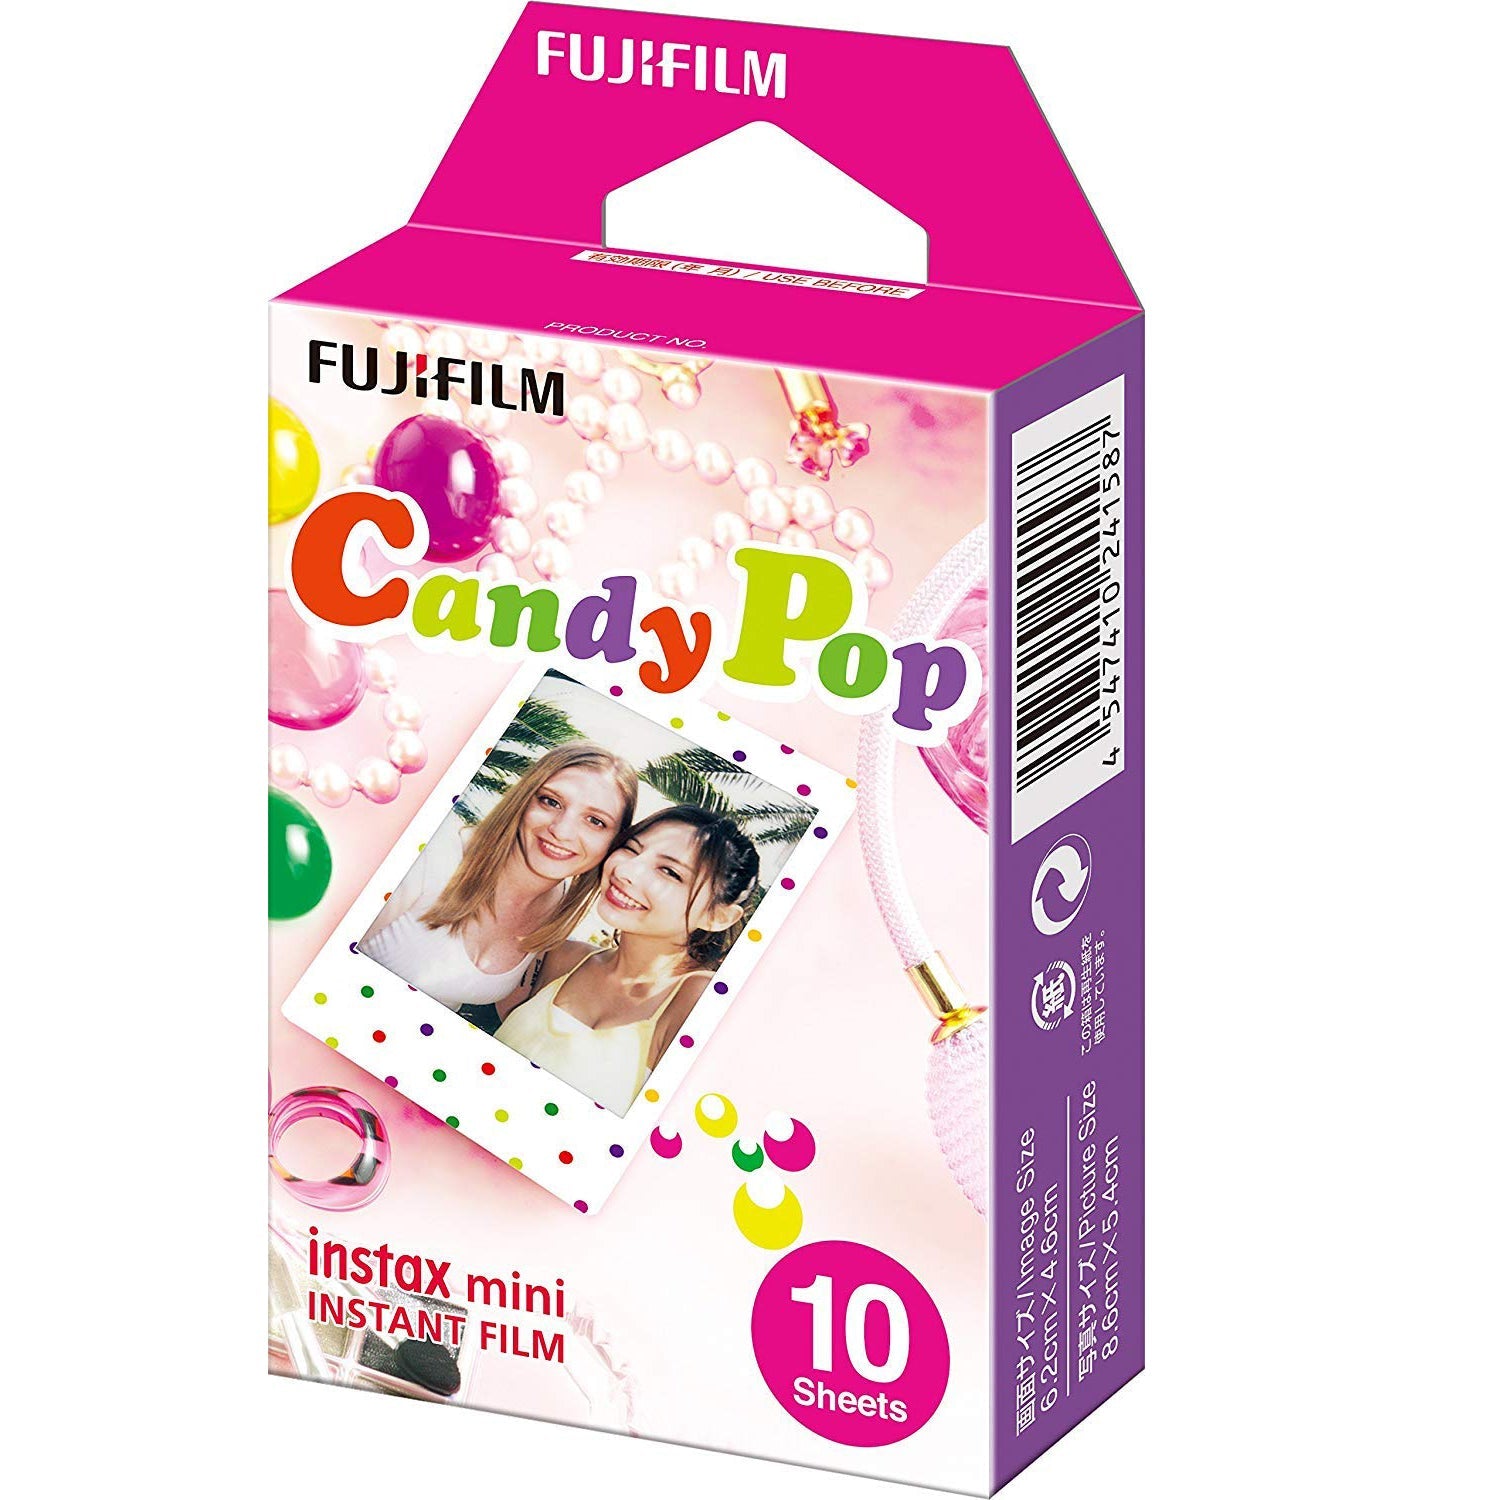 Fujifilm Instax Mini 10X1 candy pop instant film